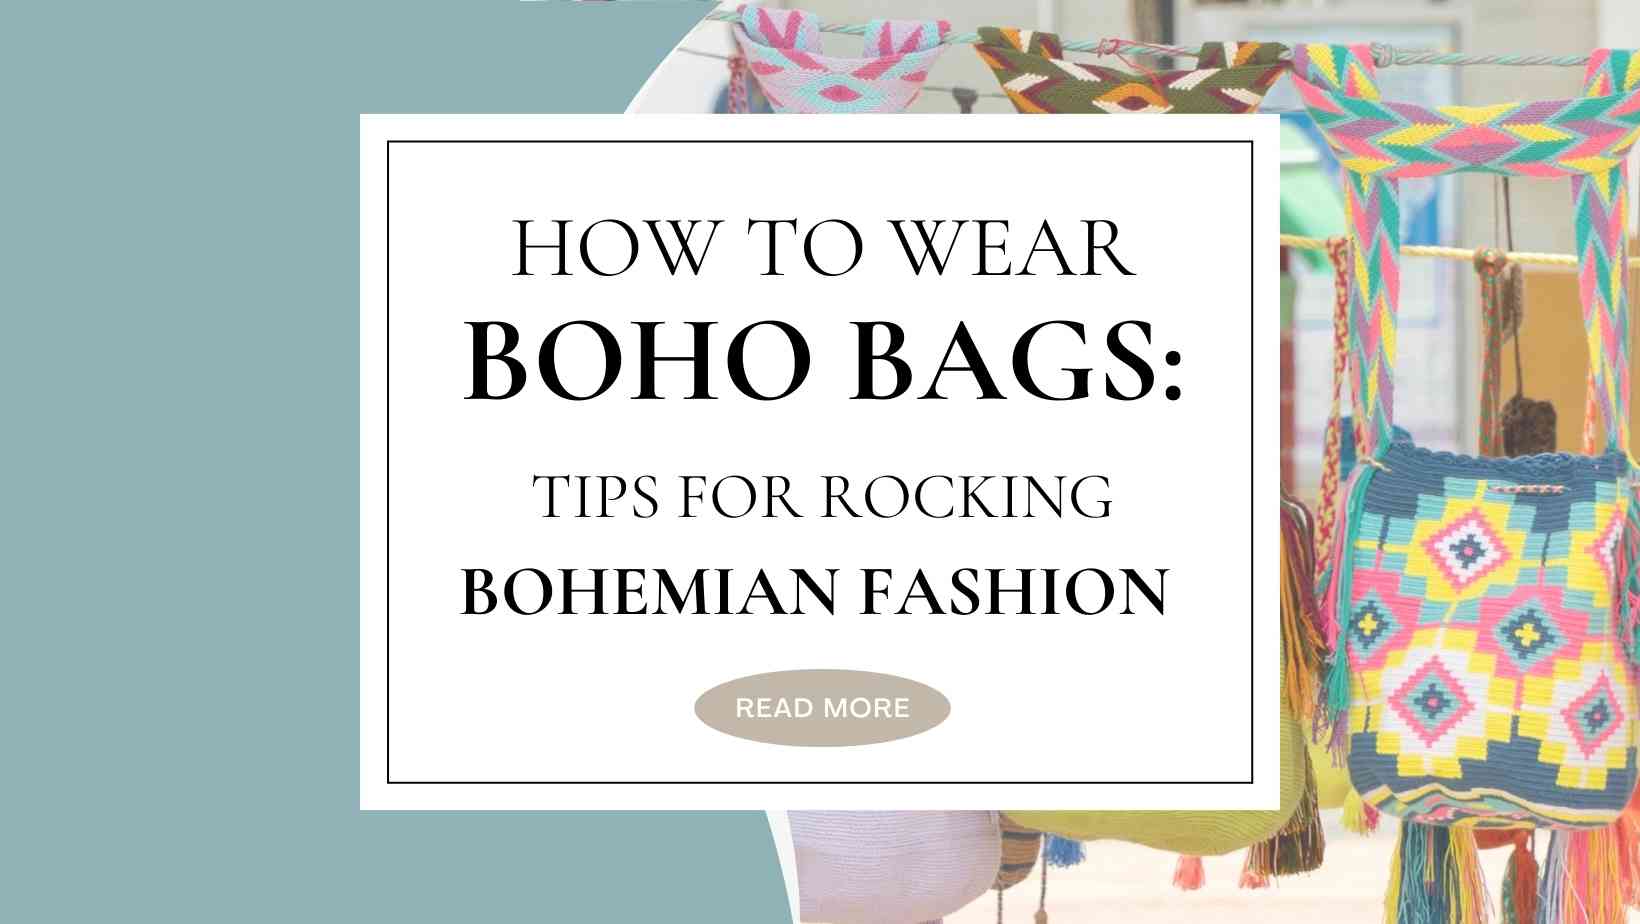 A little boho chic and that fabulous bohemian fringe bag!